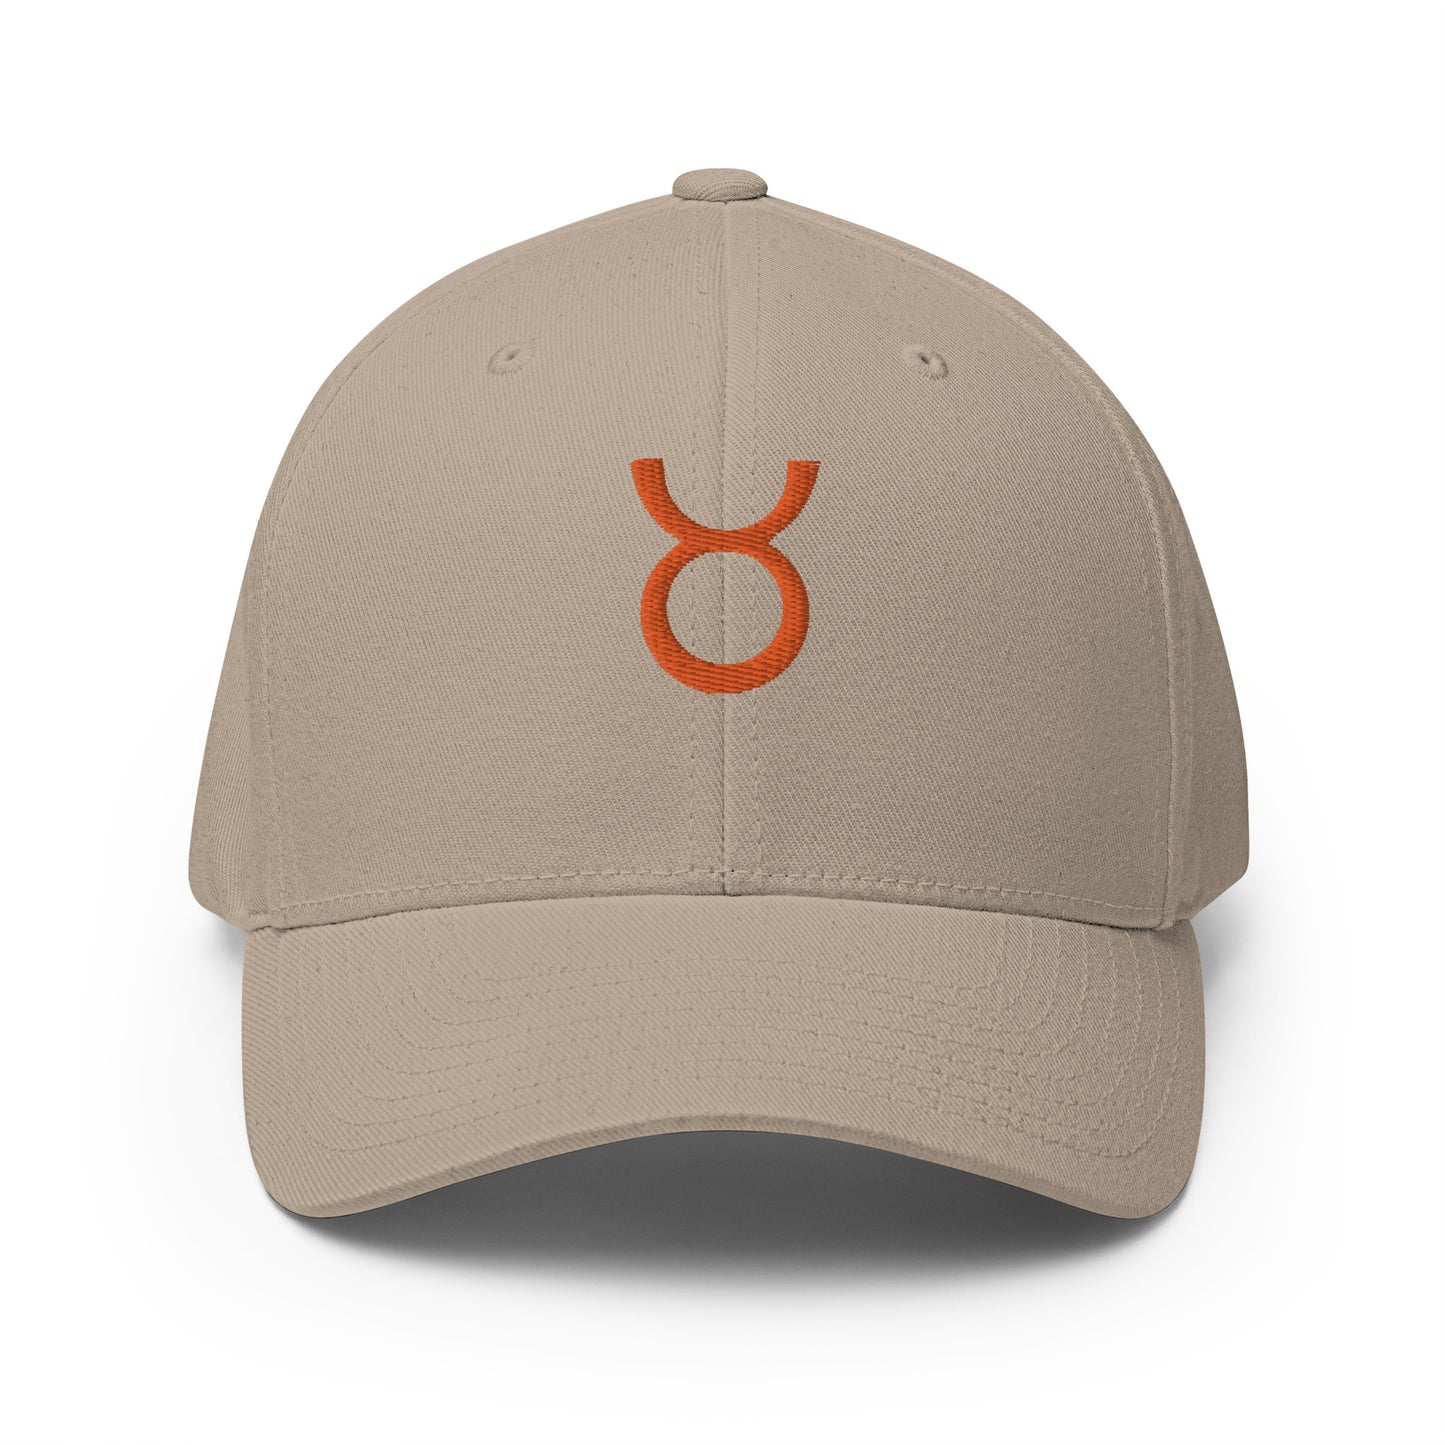 Baseball Cap with Taurus Symbol